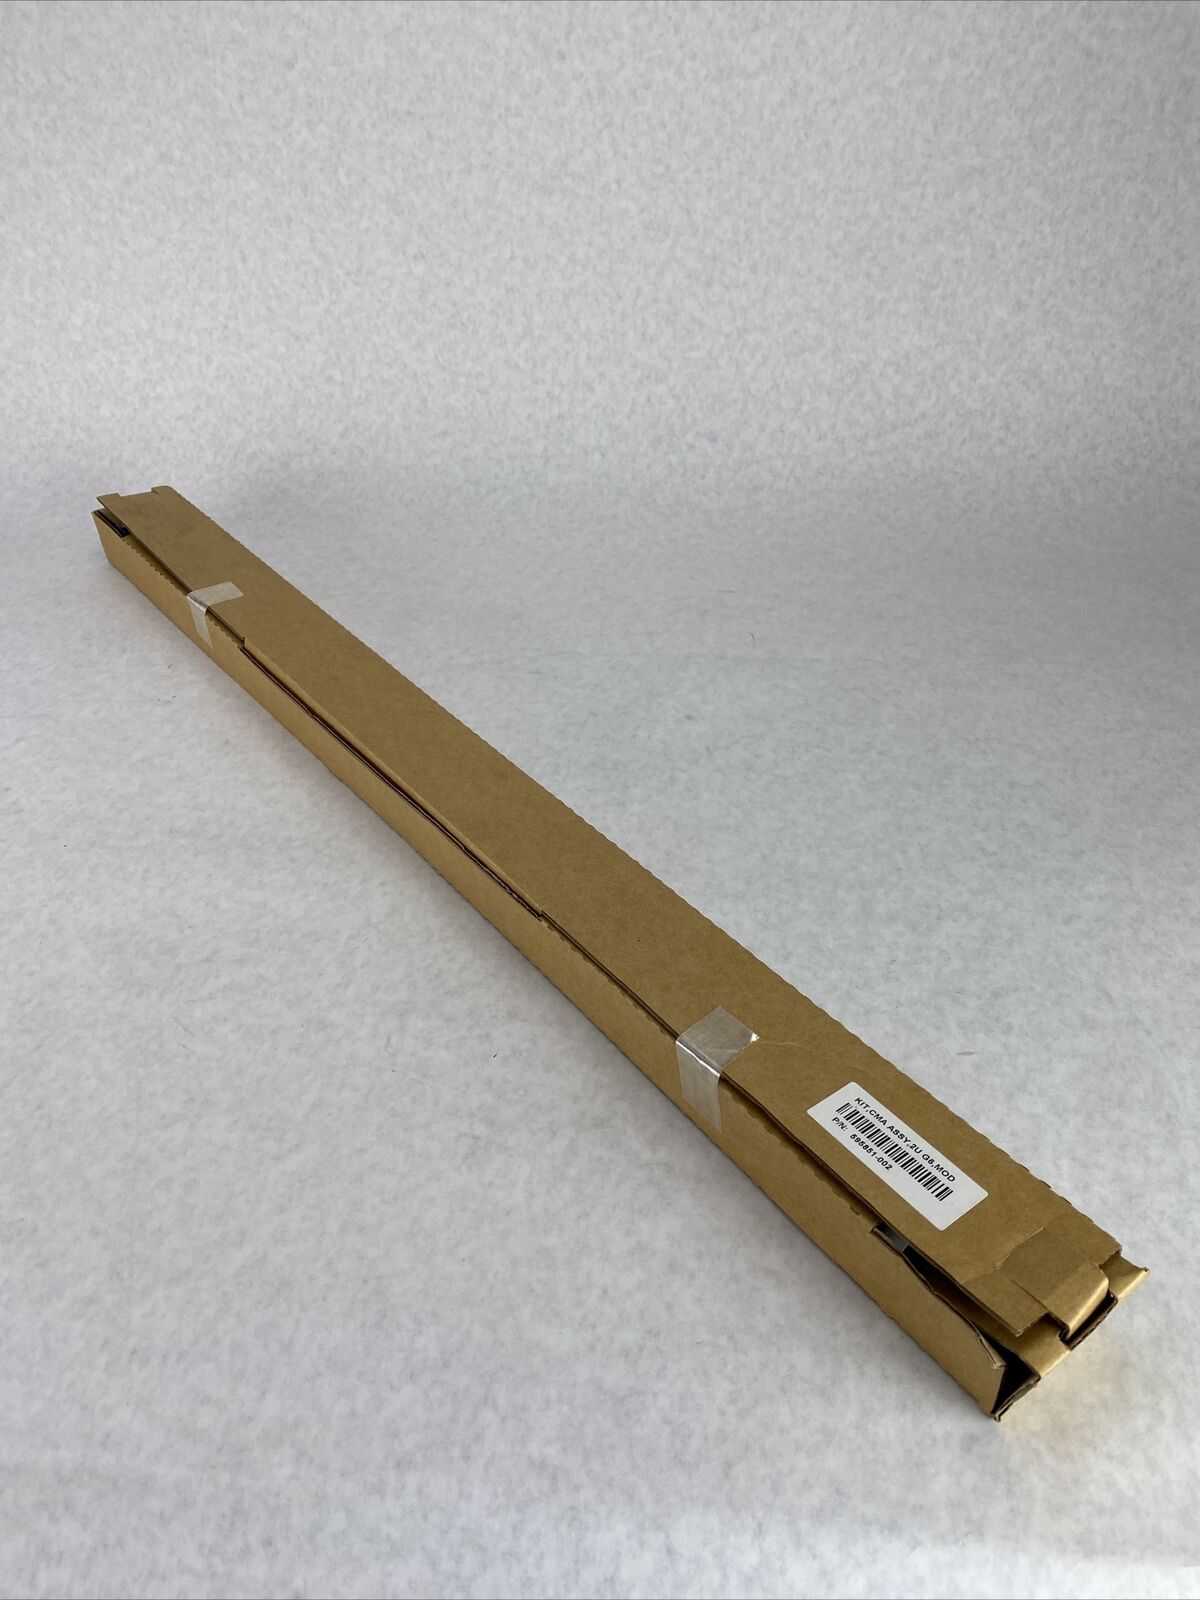 595851-002 HP ProLiant DL380 G6 Cable Management Arm Assembly